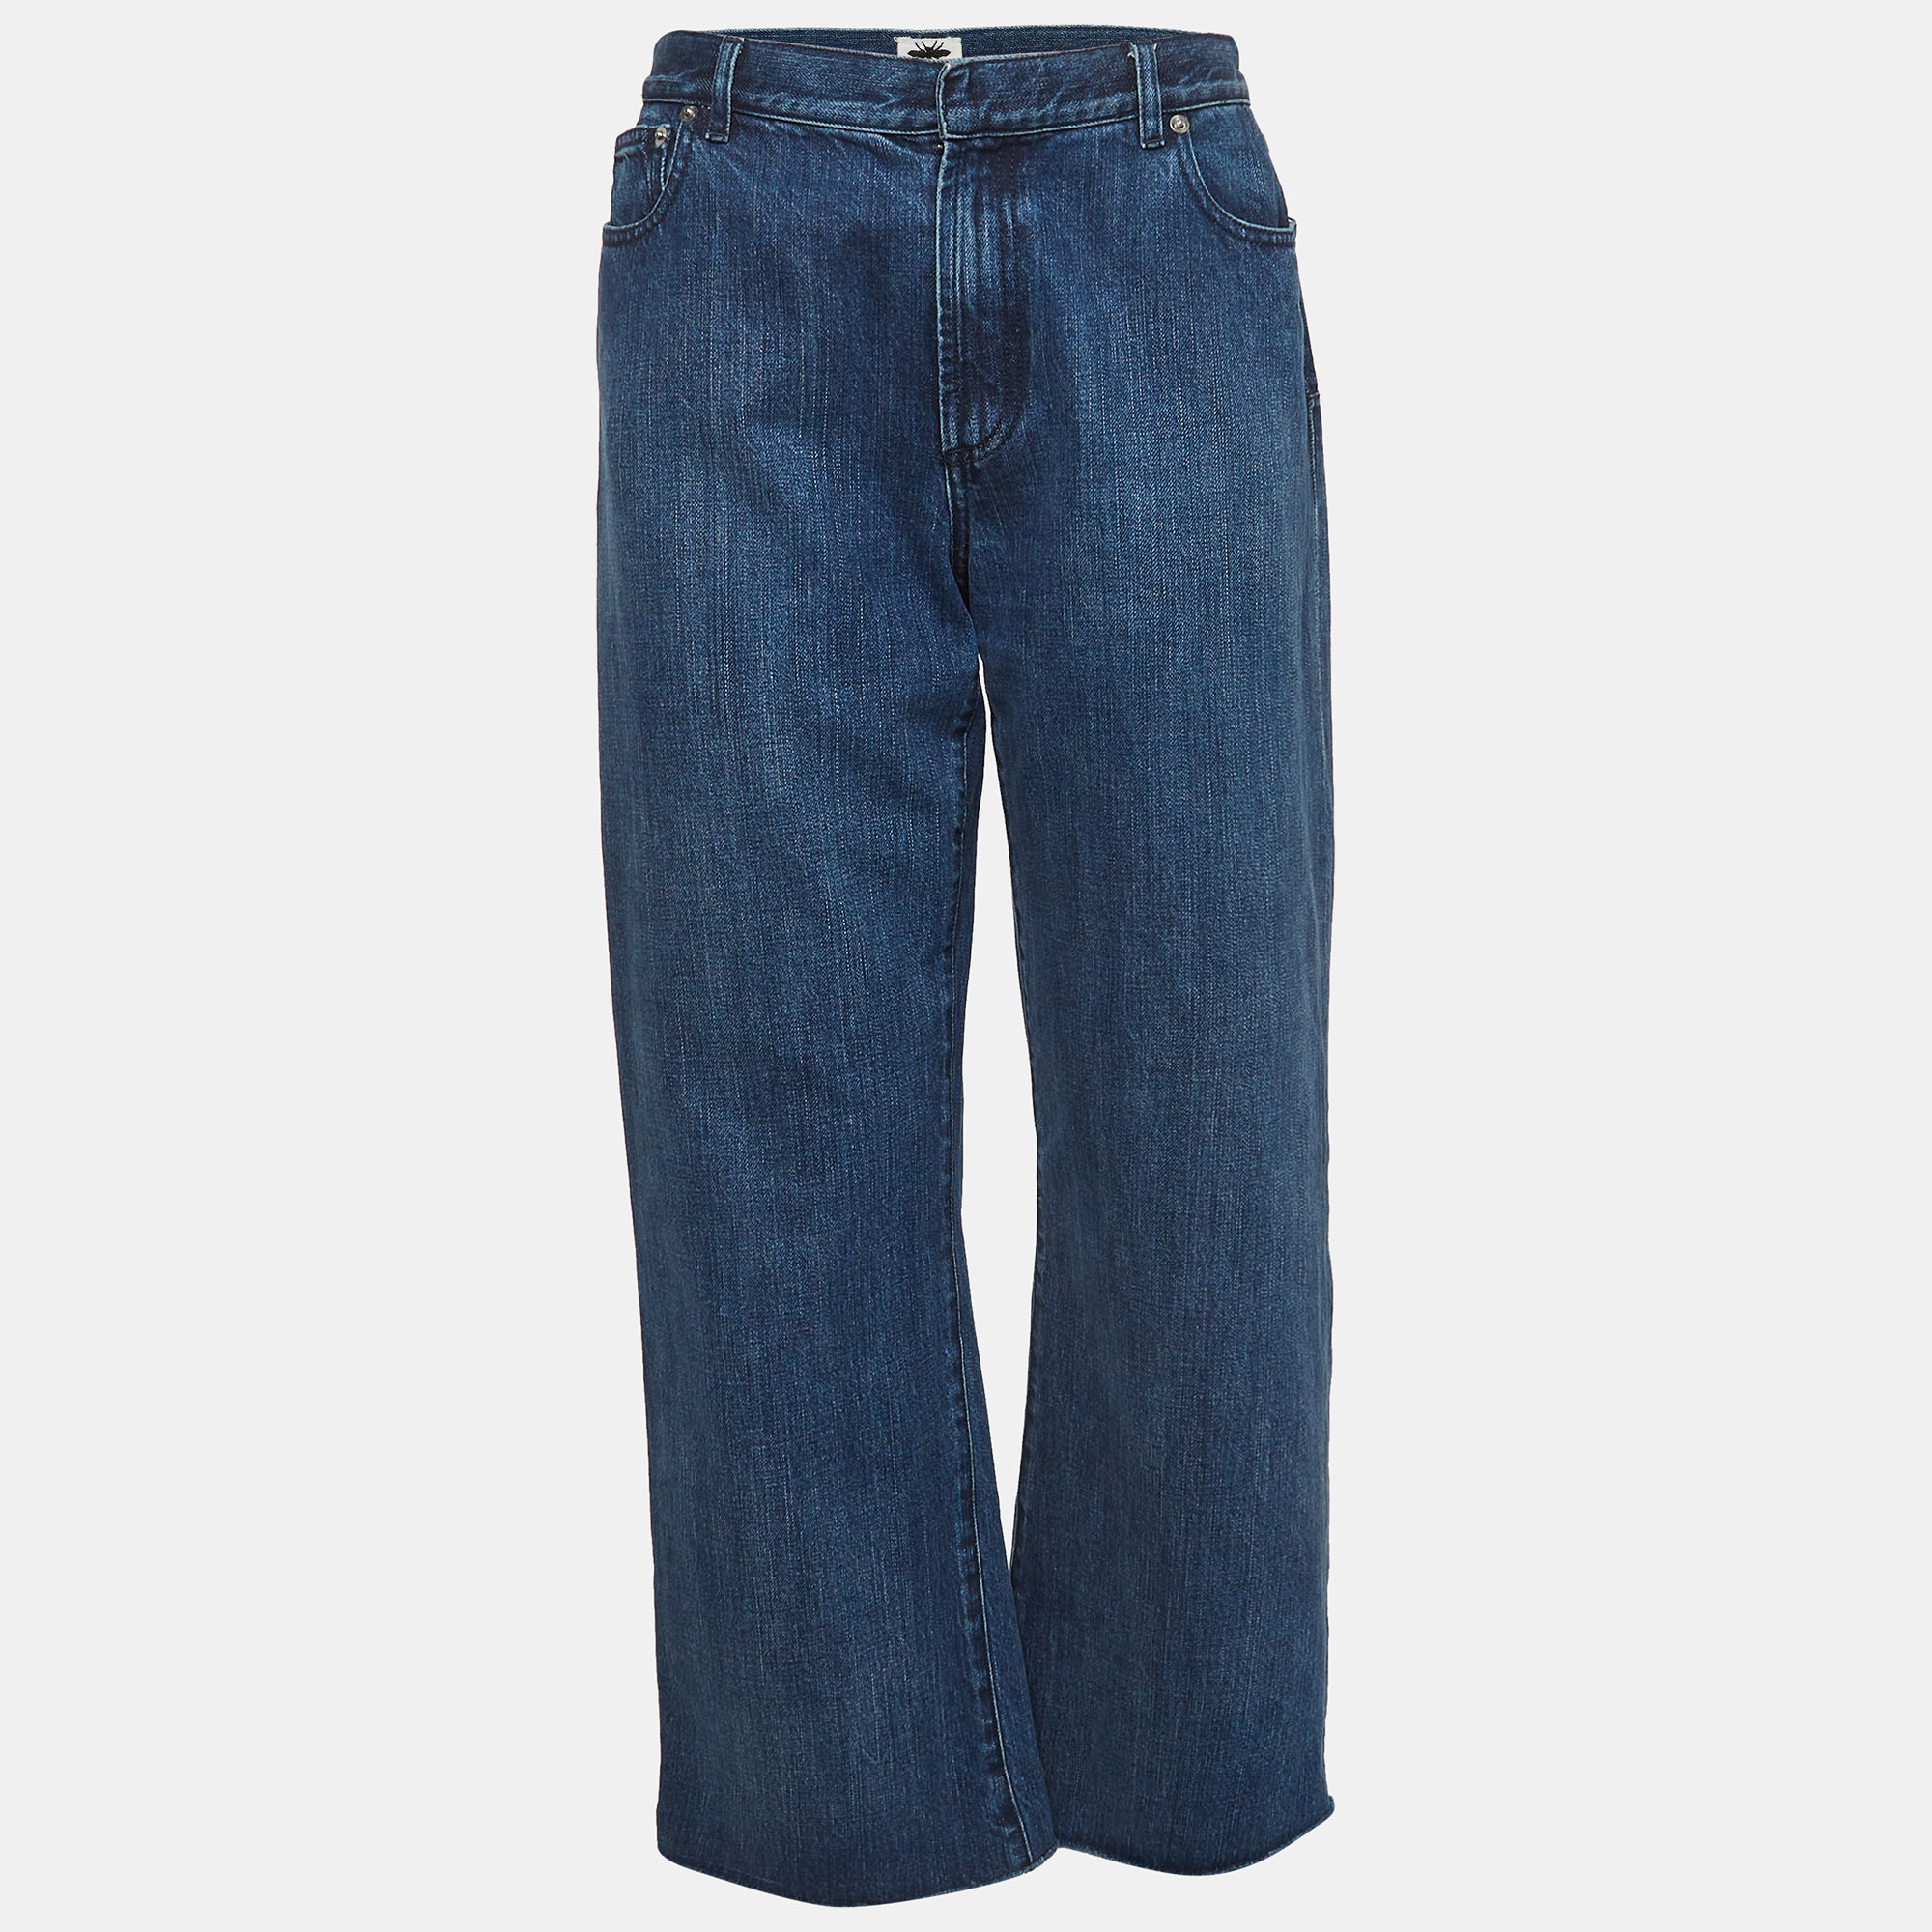 Christian dior blue raw edge denim straight leg jeans m waist 30"